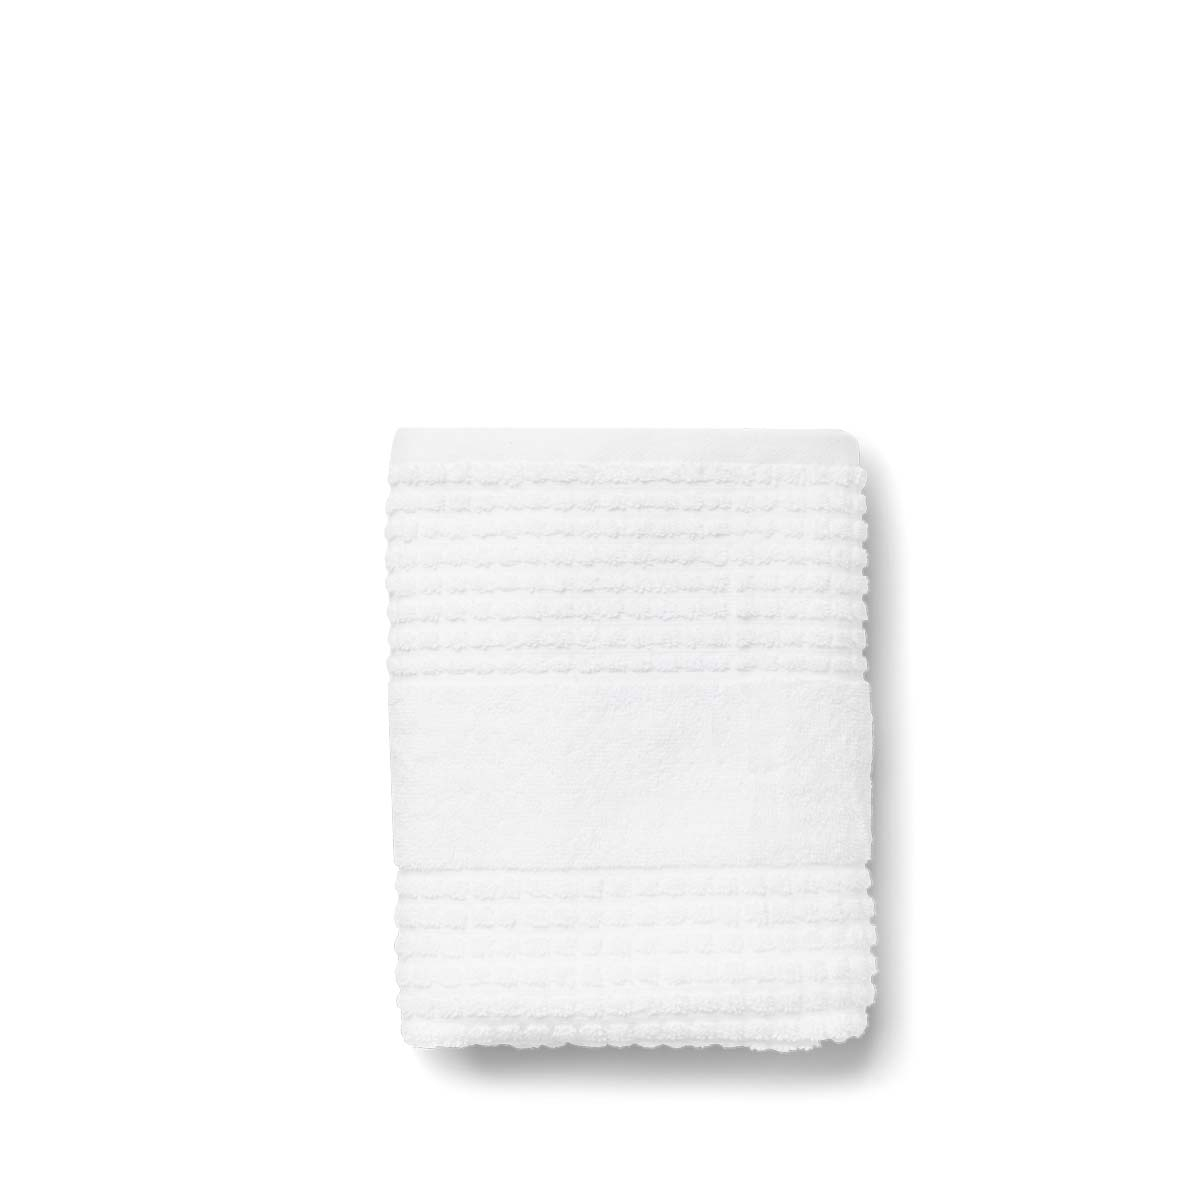 5: Juna - Check Håndklæde hvid 50x100 cm